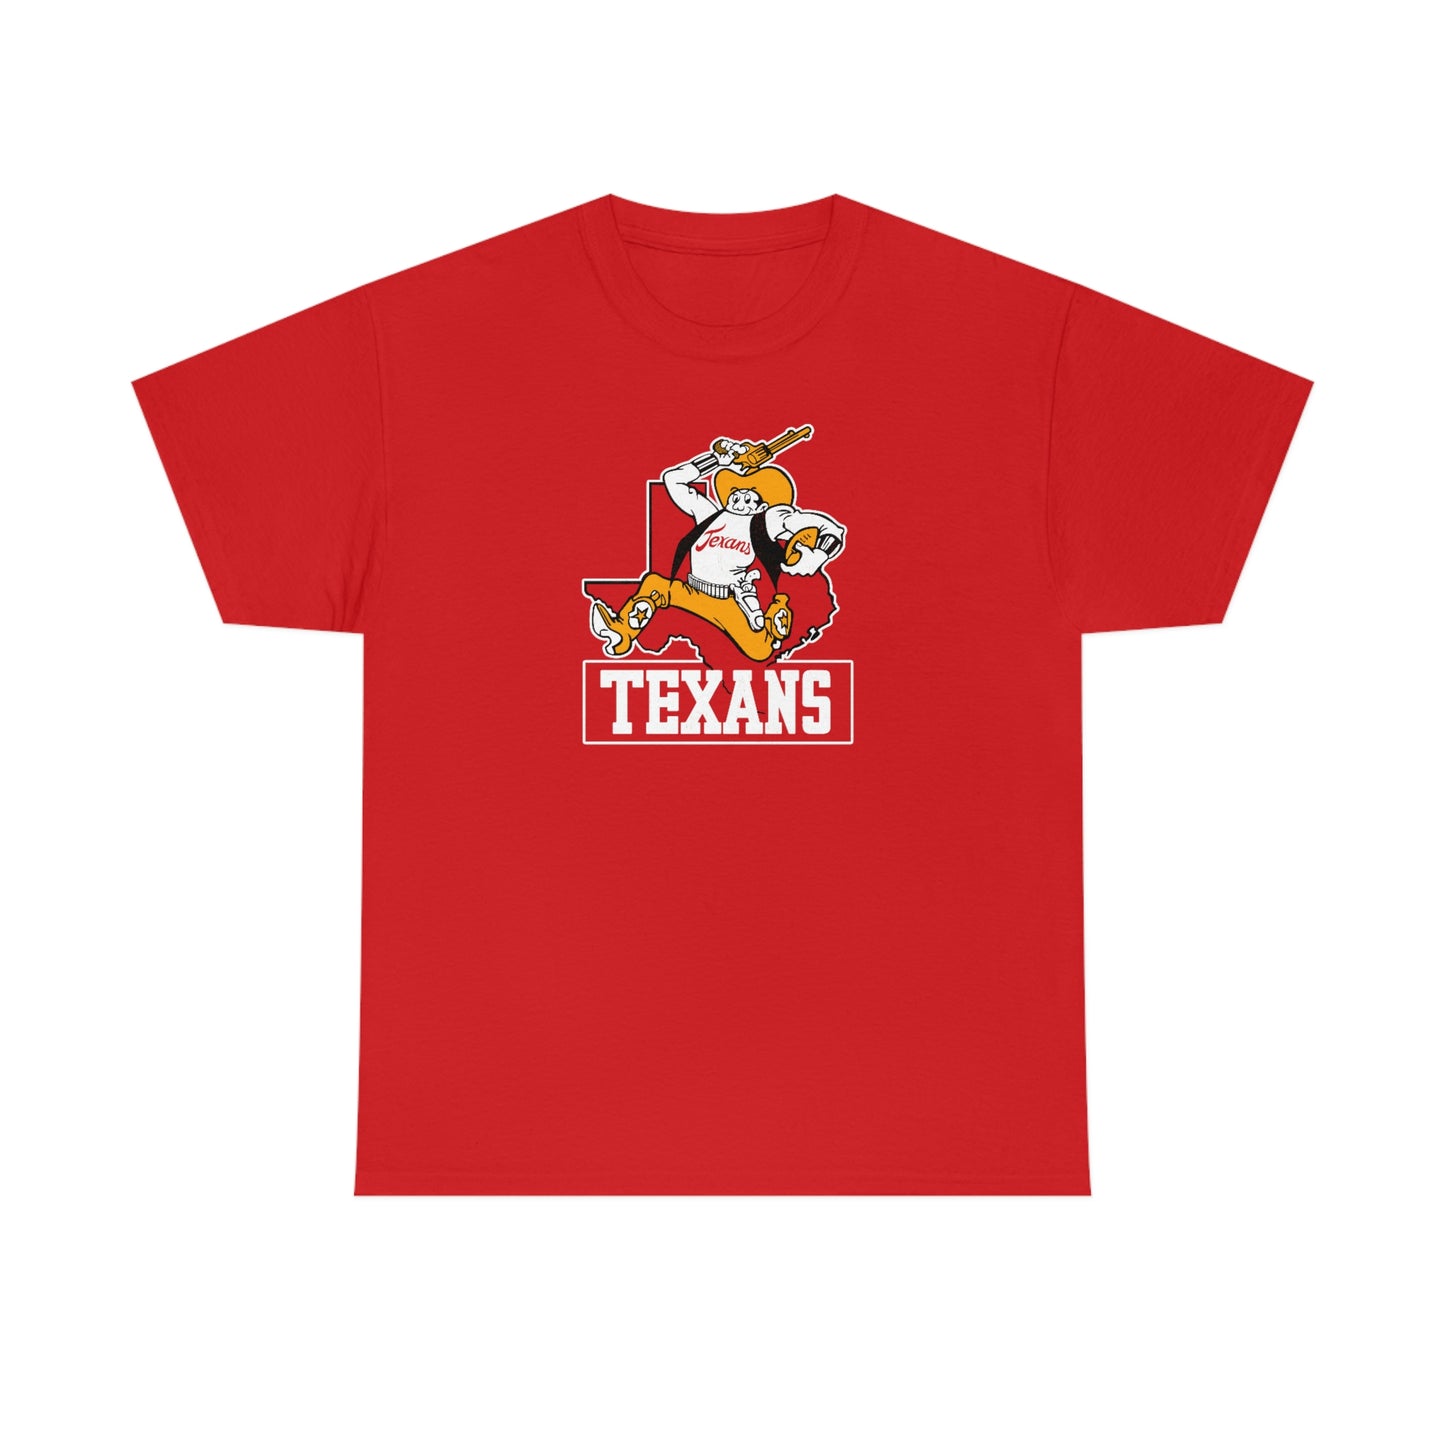 Dallas Texans T-Shirt